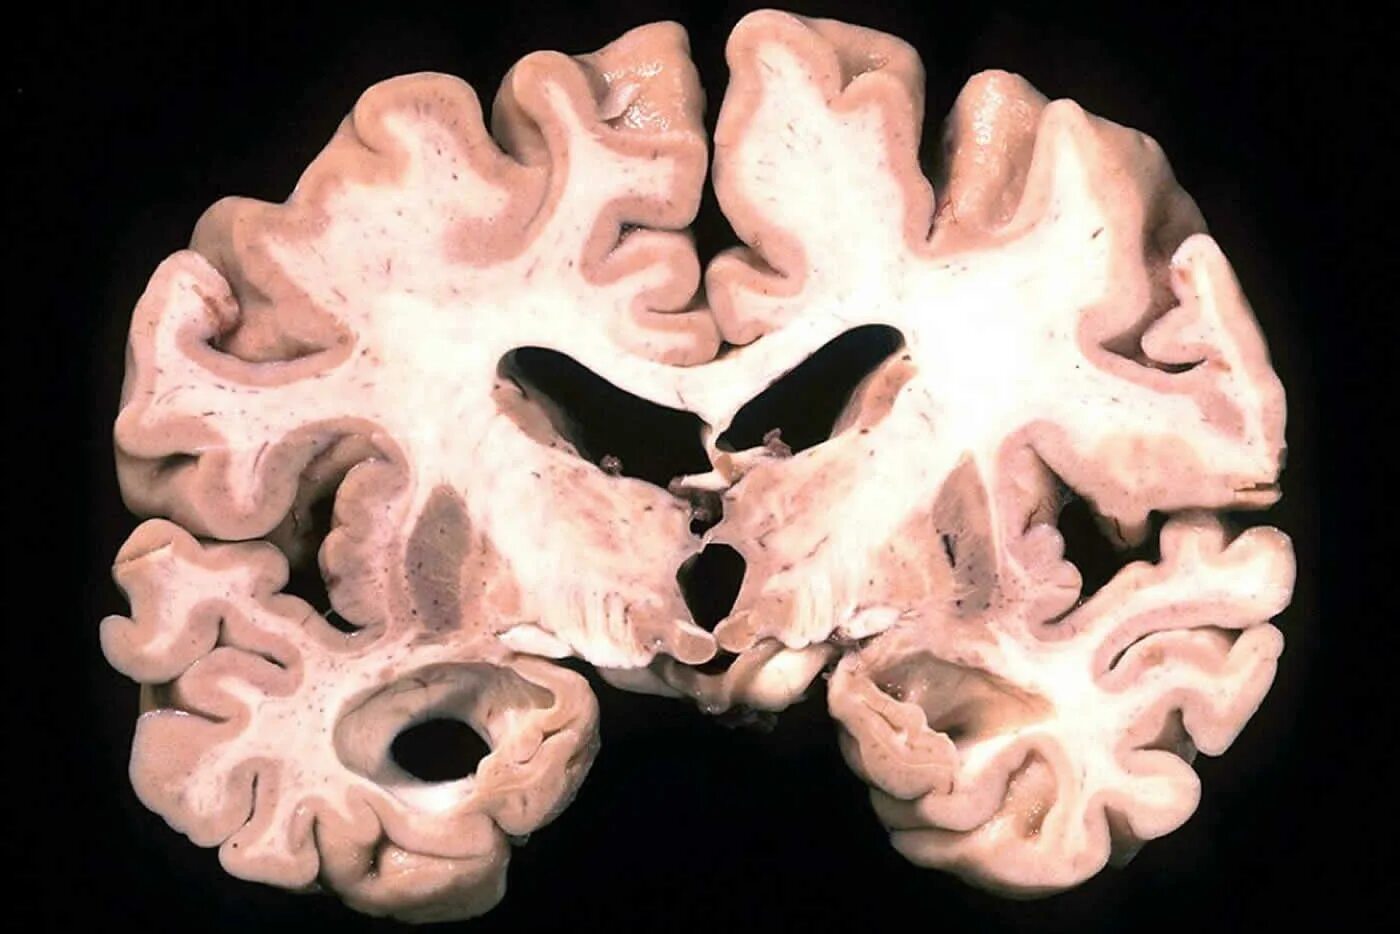 Brain disease. Болезнь Alzheimer. Головной мозг при болезни Альцгеймера.